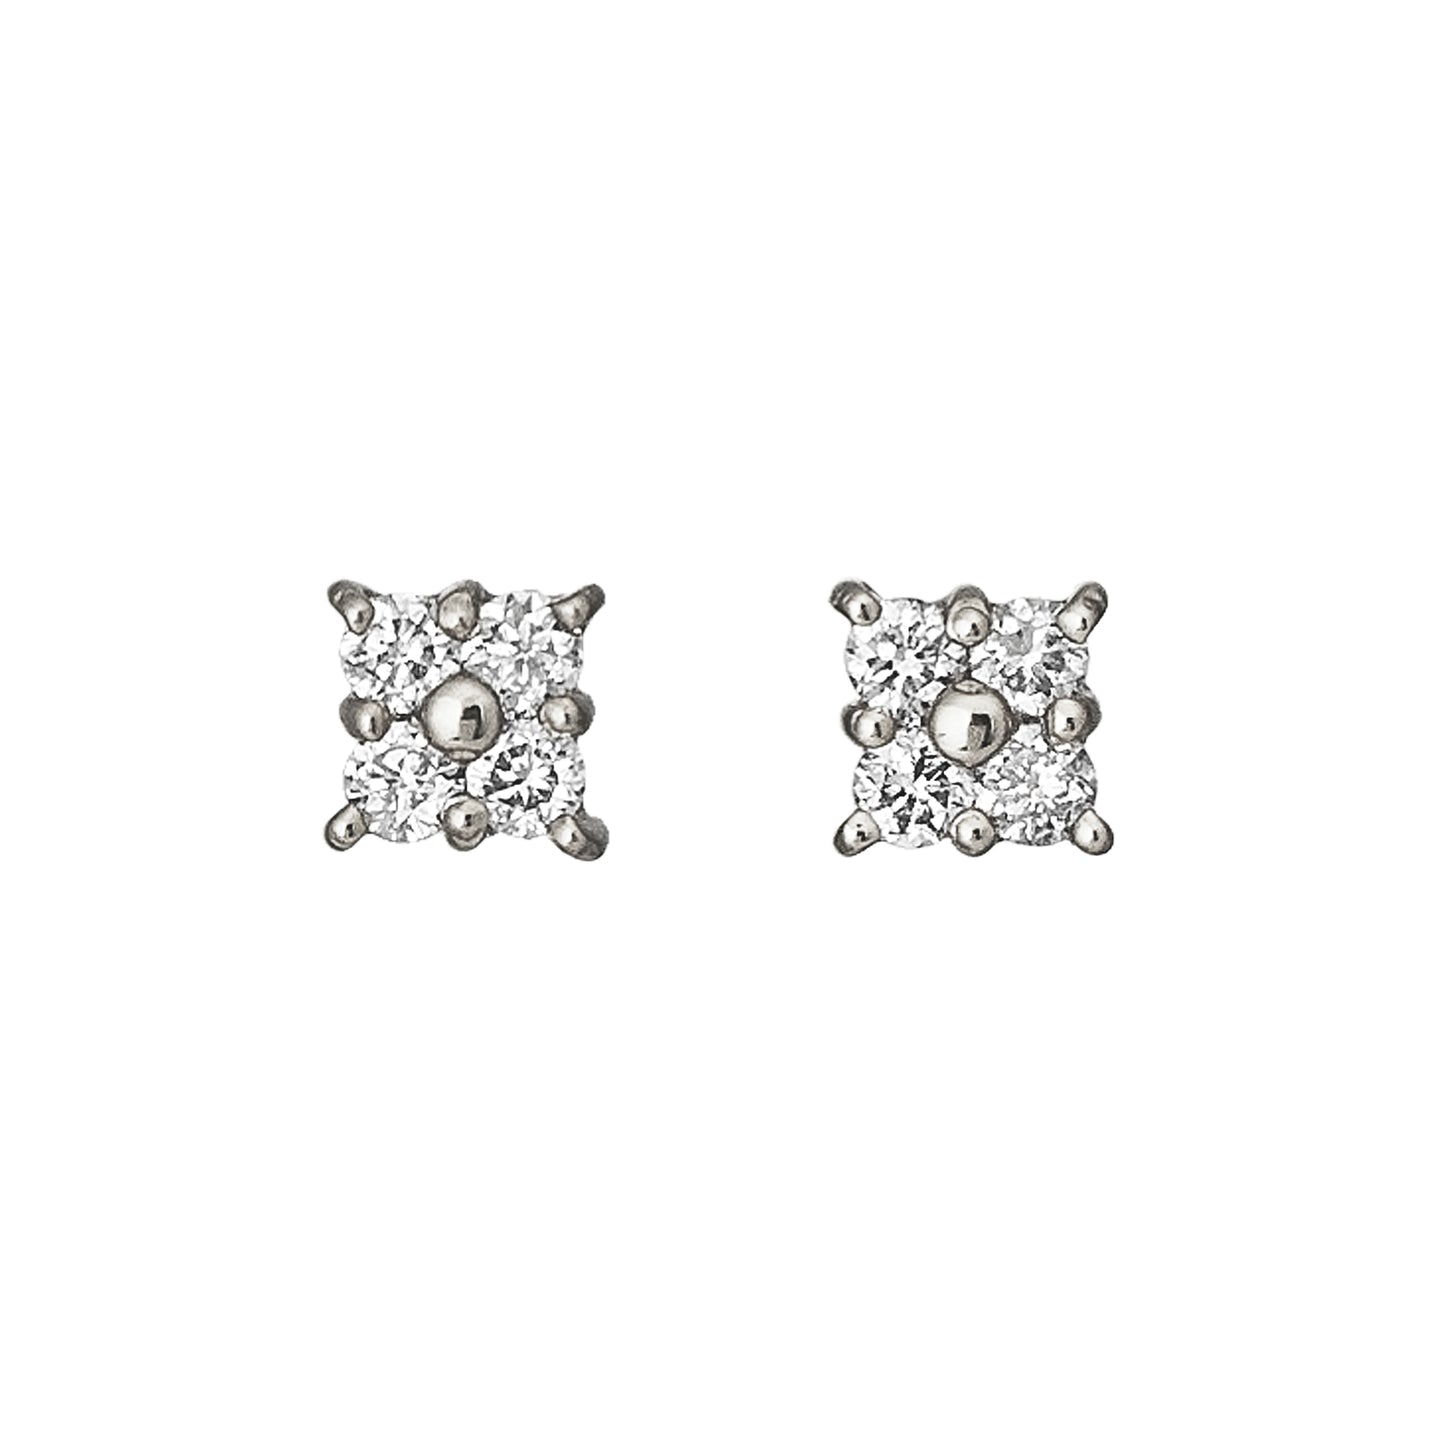 14K White Gold Diamond Square Earrings - Product Image